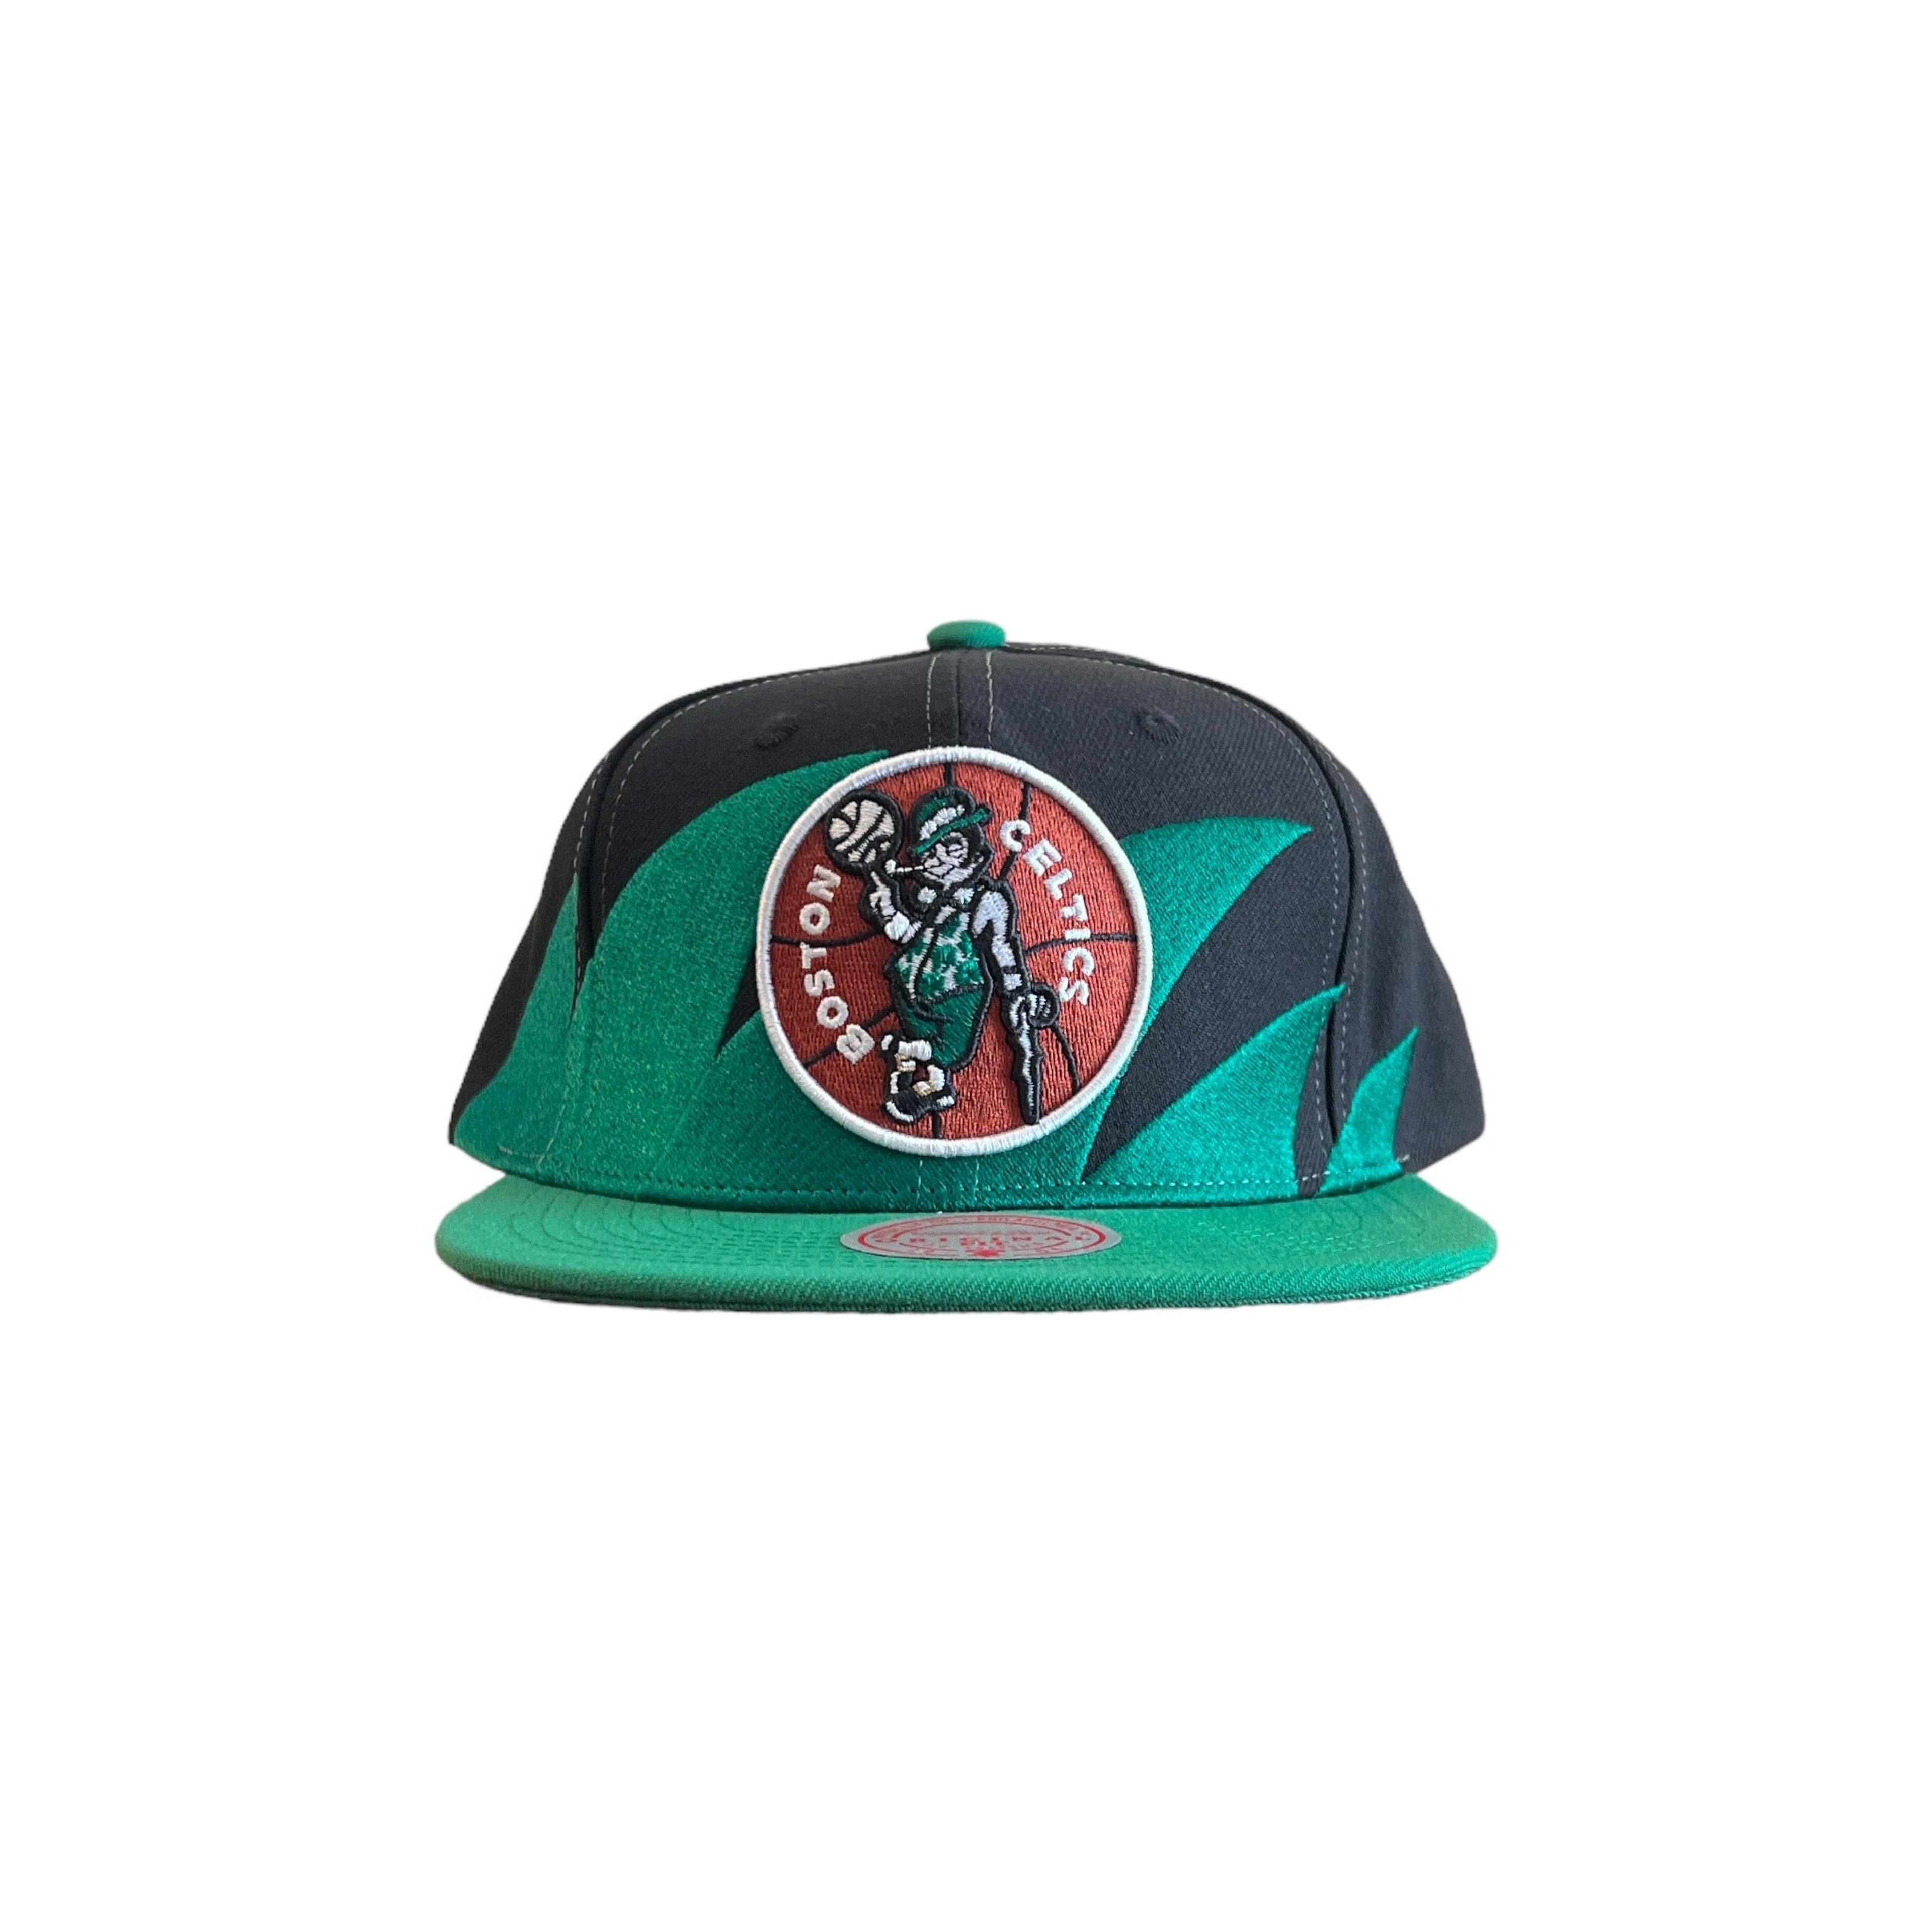 Mitchell & Ness Boston Celtics Snapshot Snapback Hat - Black